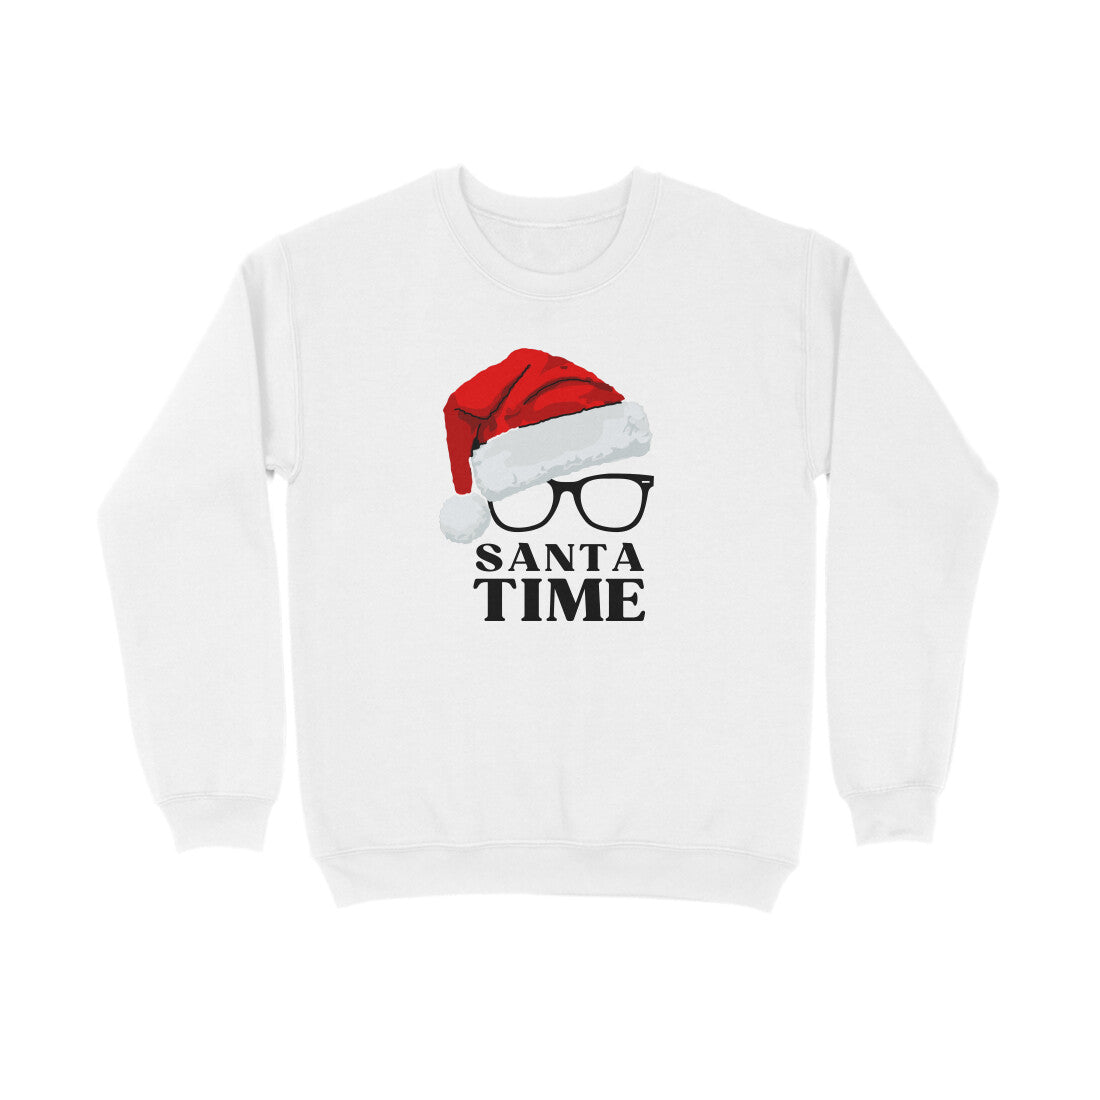 Santa Time - Unisex White Sweatshirt